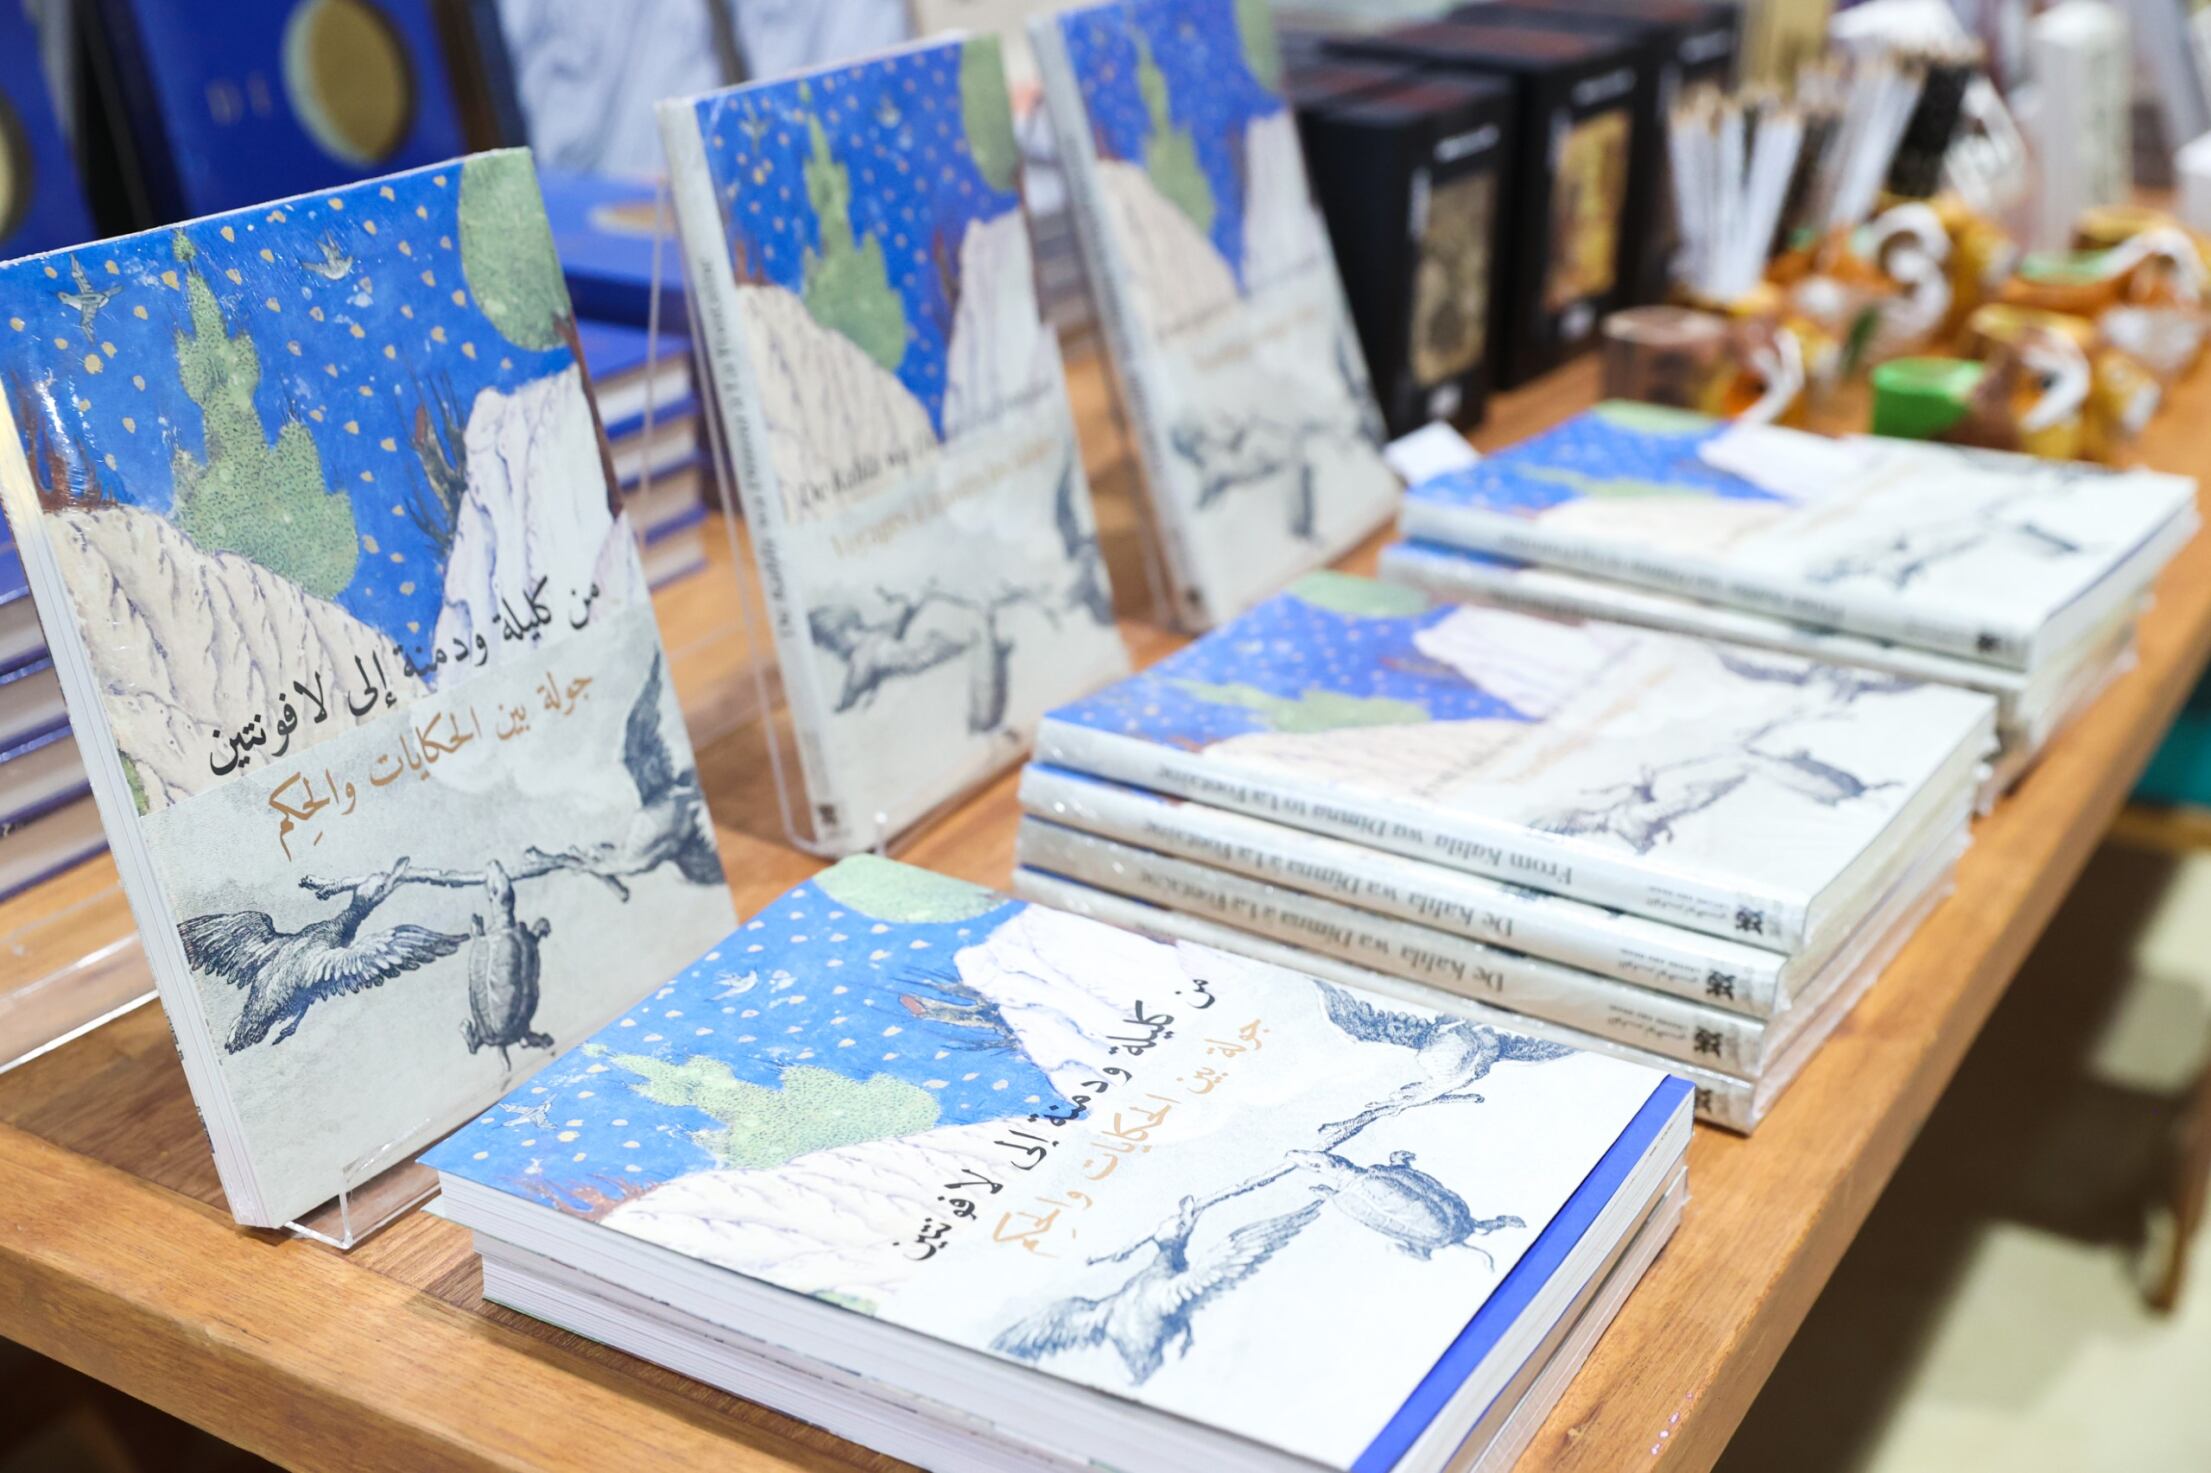 33rd Abu Dhabi International Book Fair showcases history and tales of ‘Kalila wa Dimna’